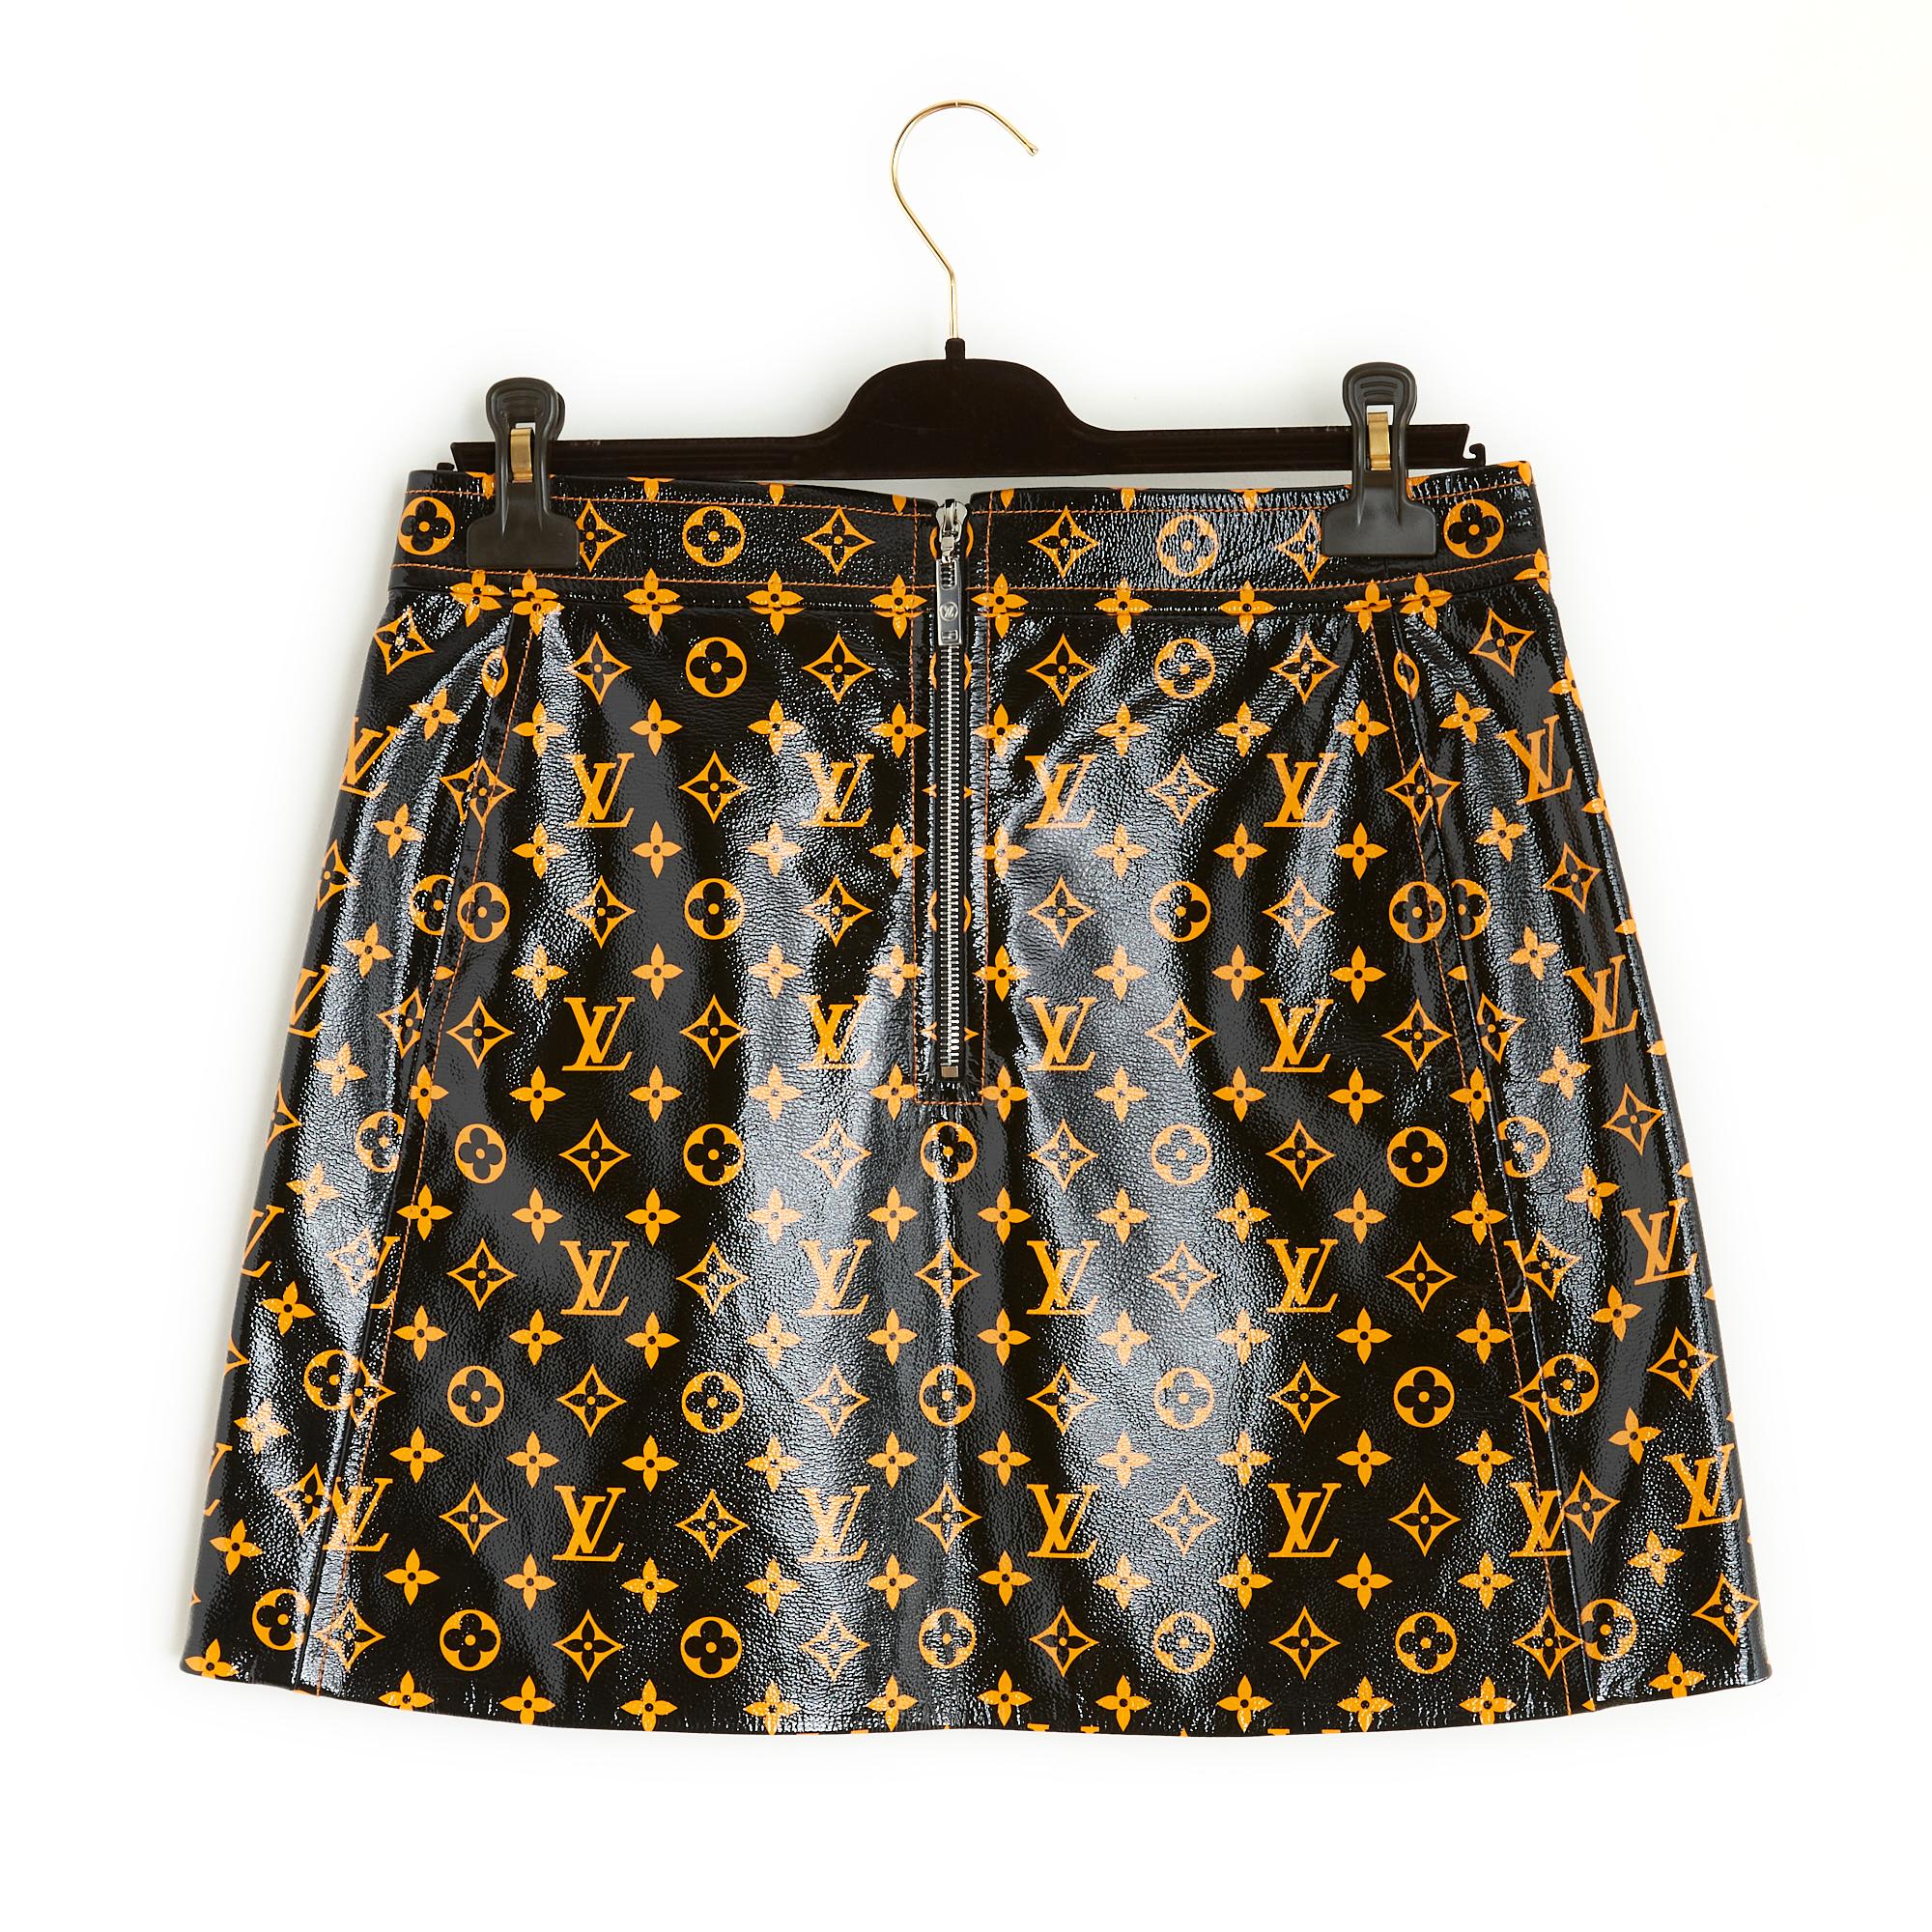 Women's or Men's FW2019 Louis Vuitton Black patent Leather LV Mini Skirt